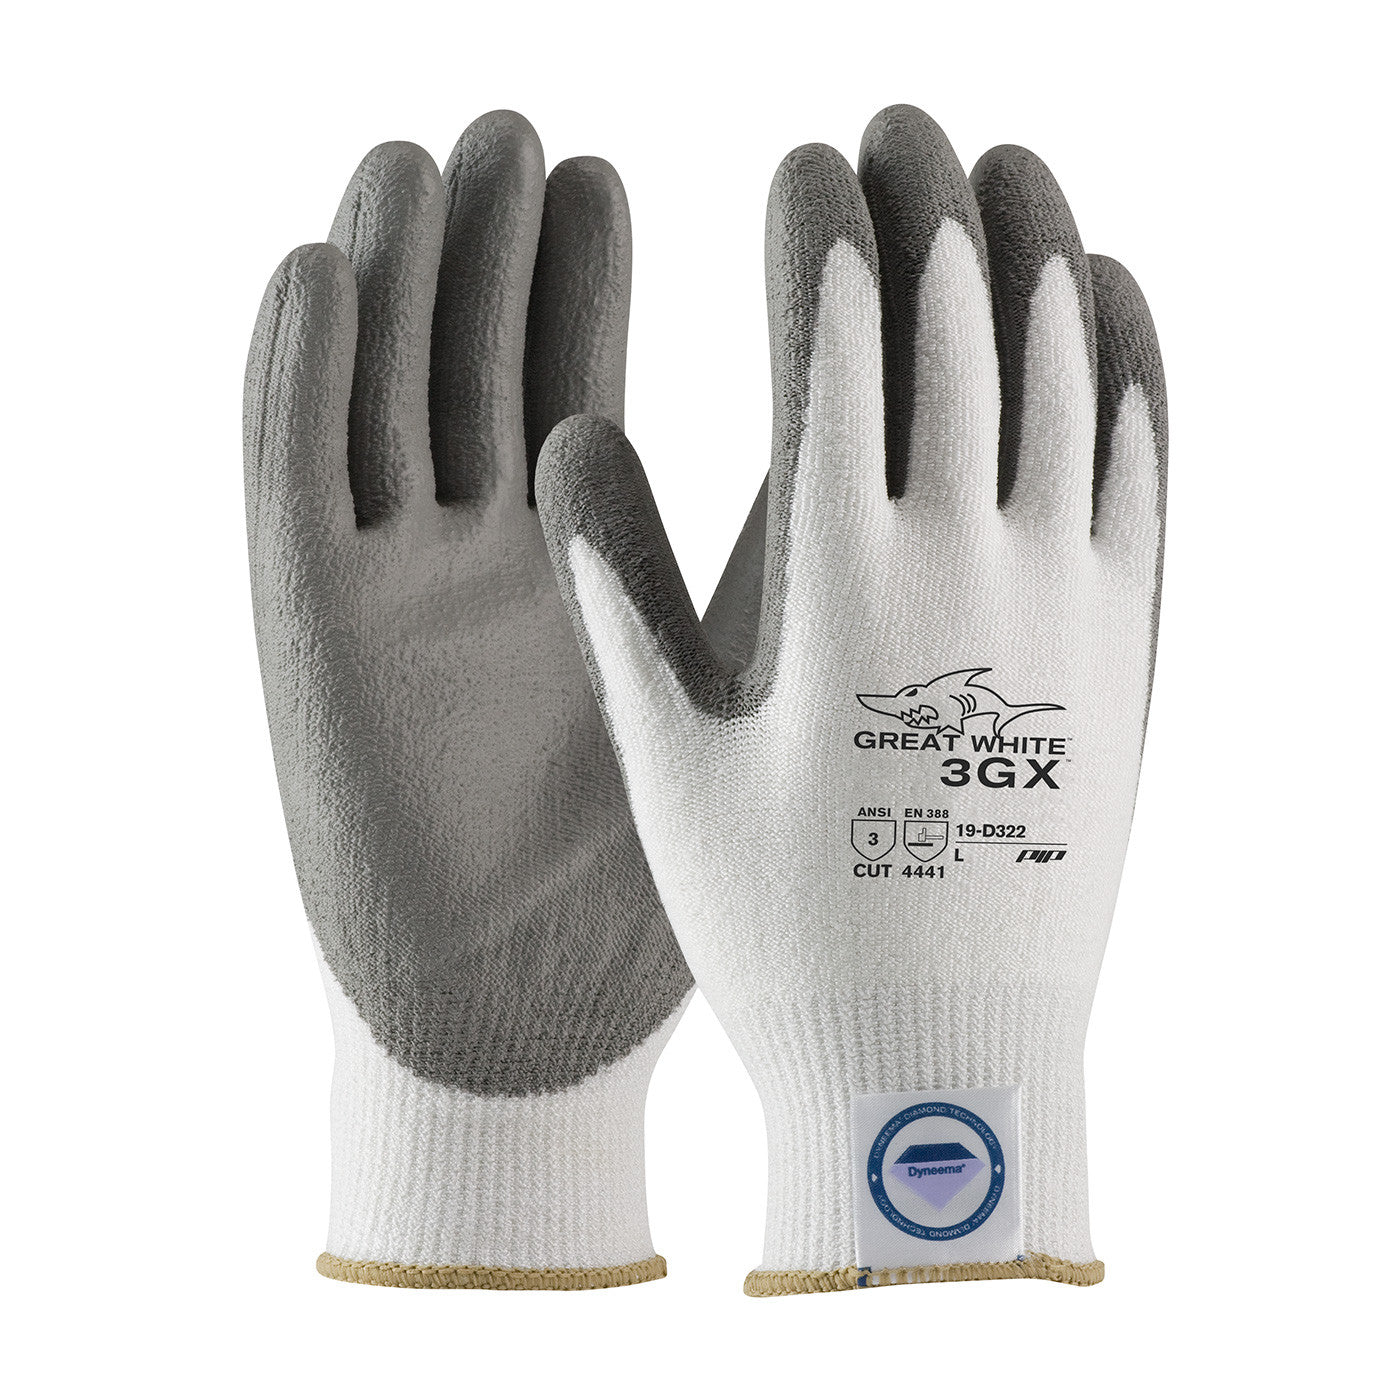 Great White 3GX 19-D322 Dyneema Cut Resistant Gloves, Cut Level A$